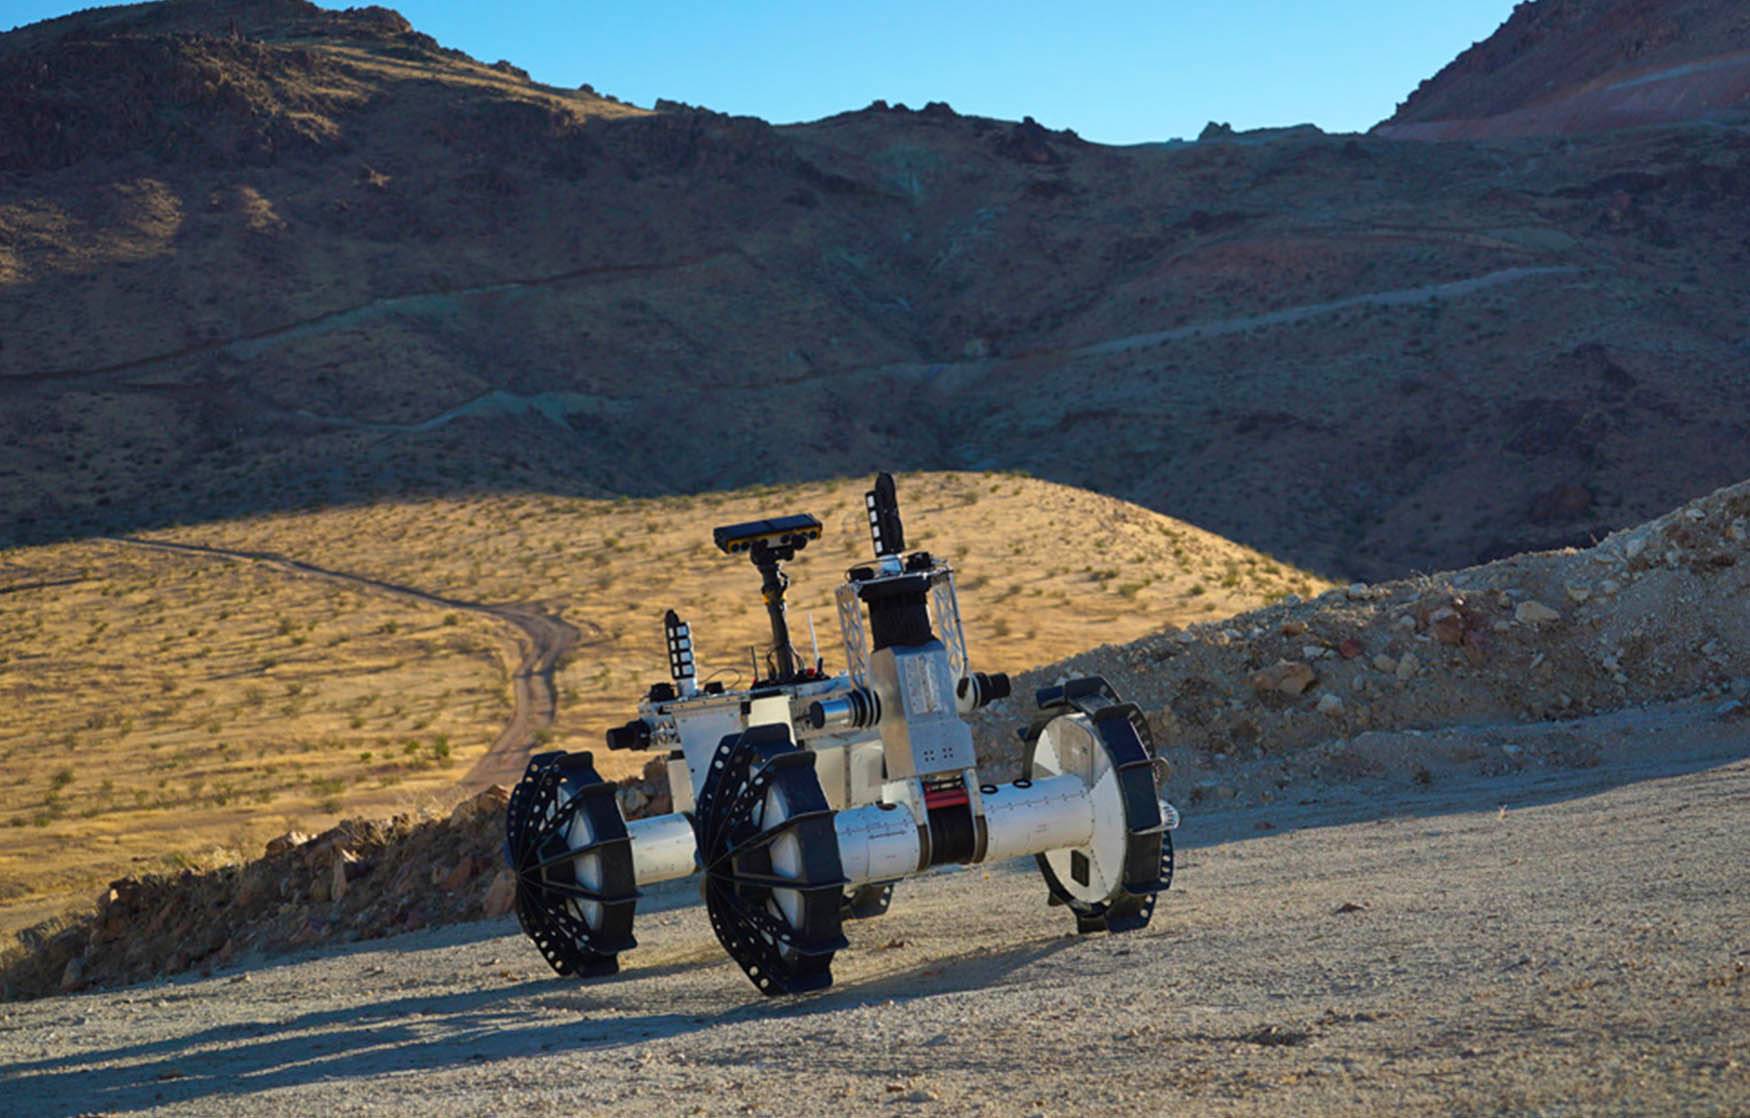 NASA's ridiculous rover concept can hit any terrain - BGR

